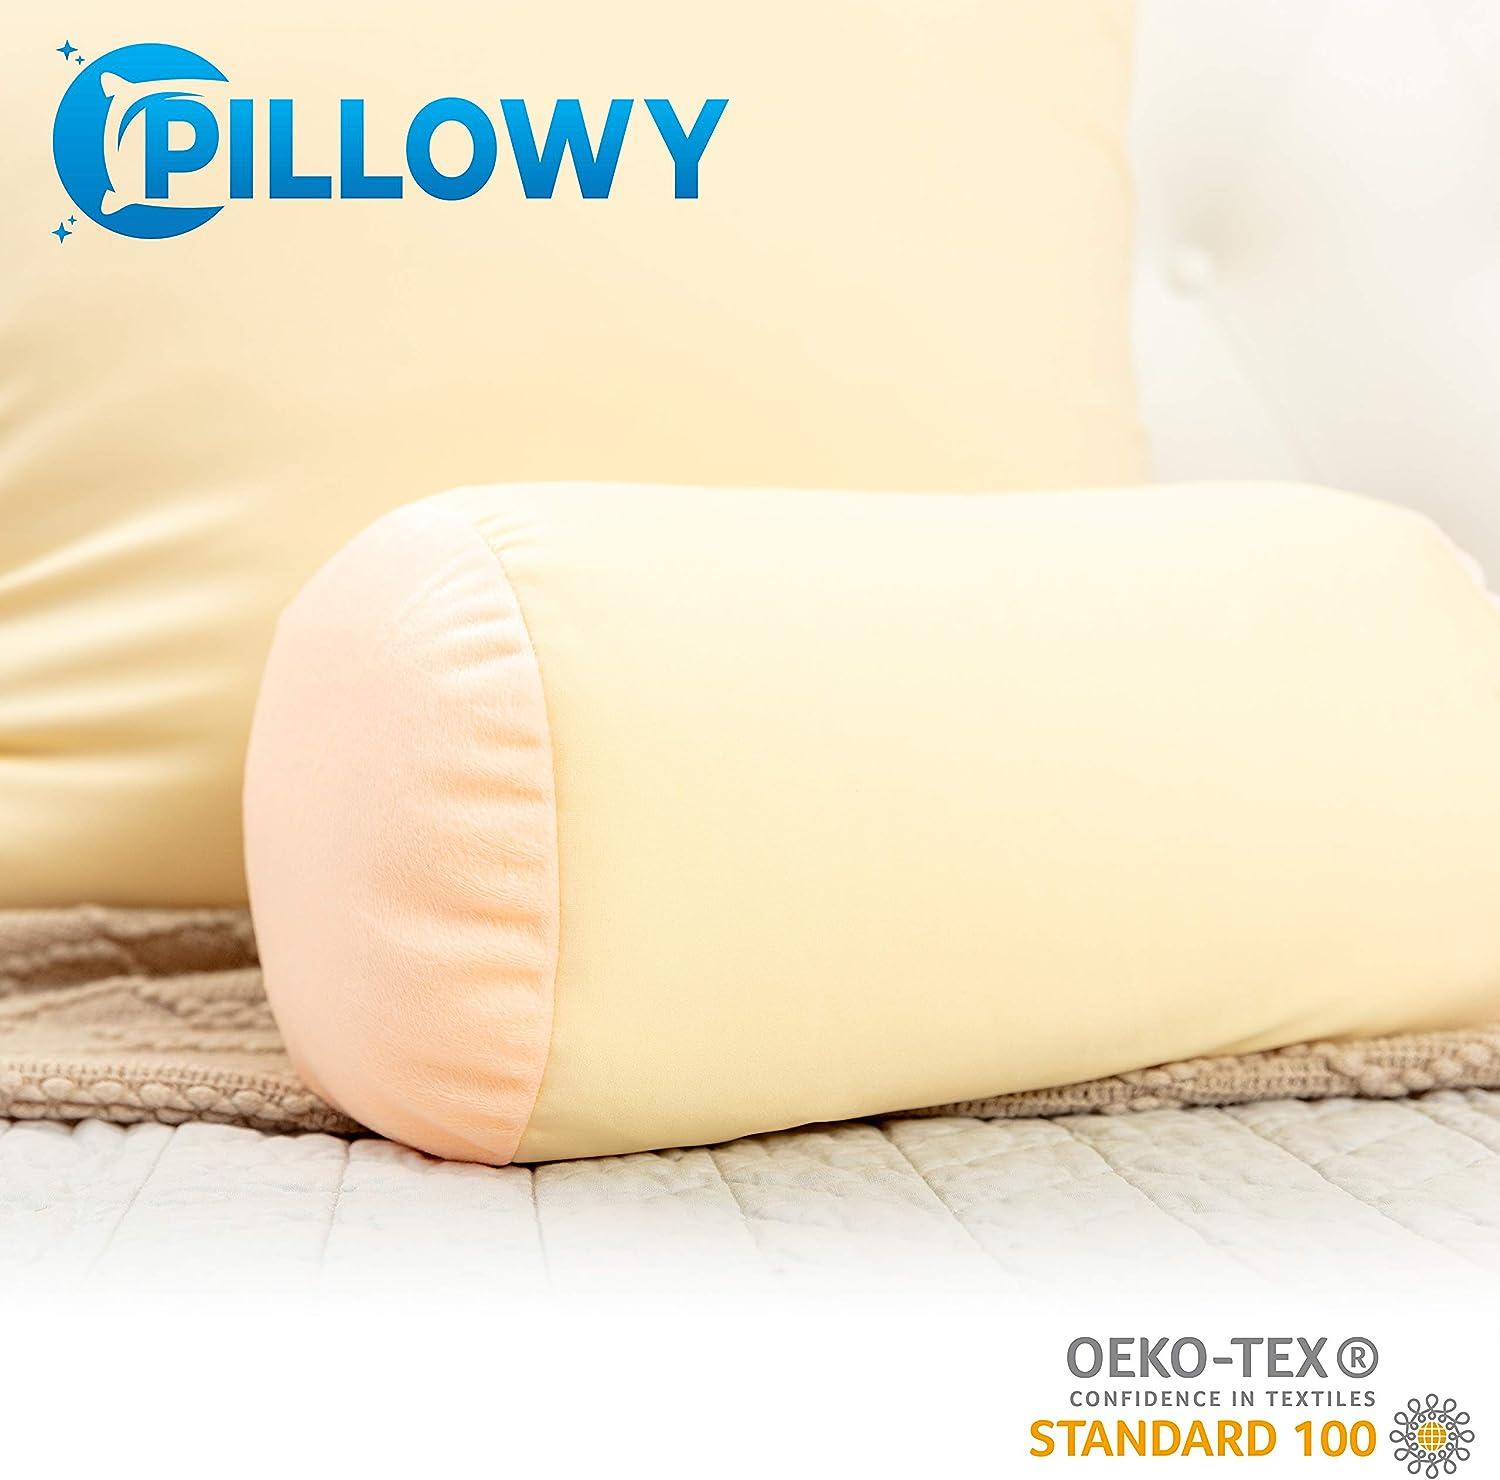 Microbead Bolster Neck Roll Pillow - Silky Feel